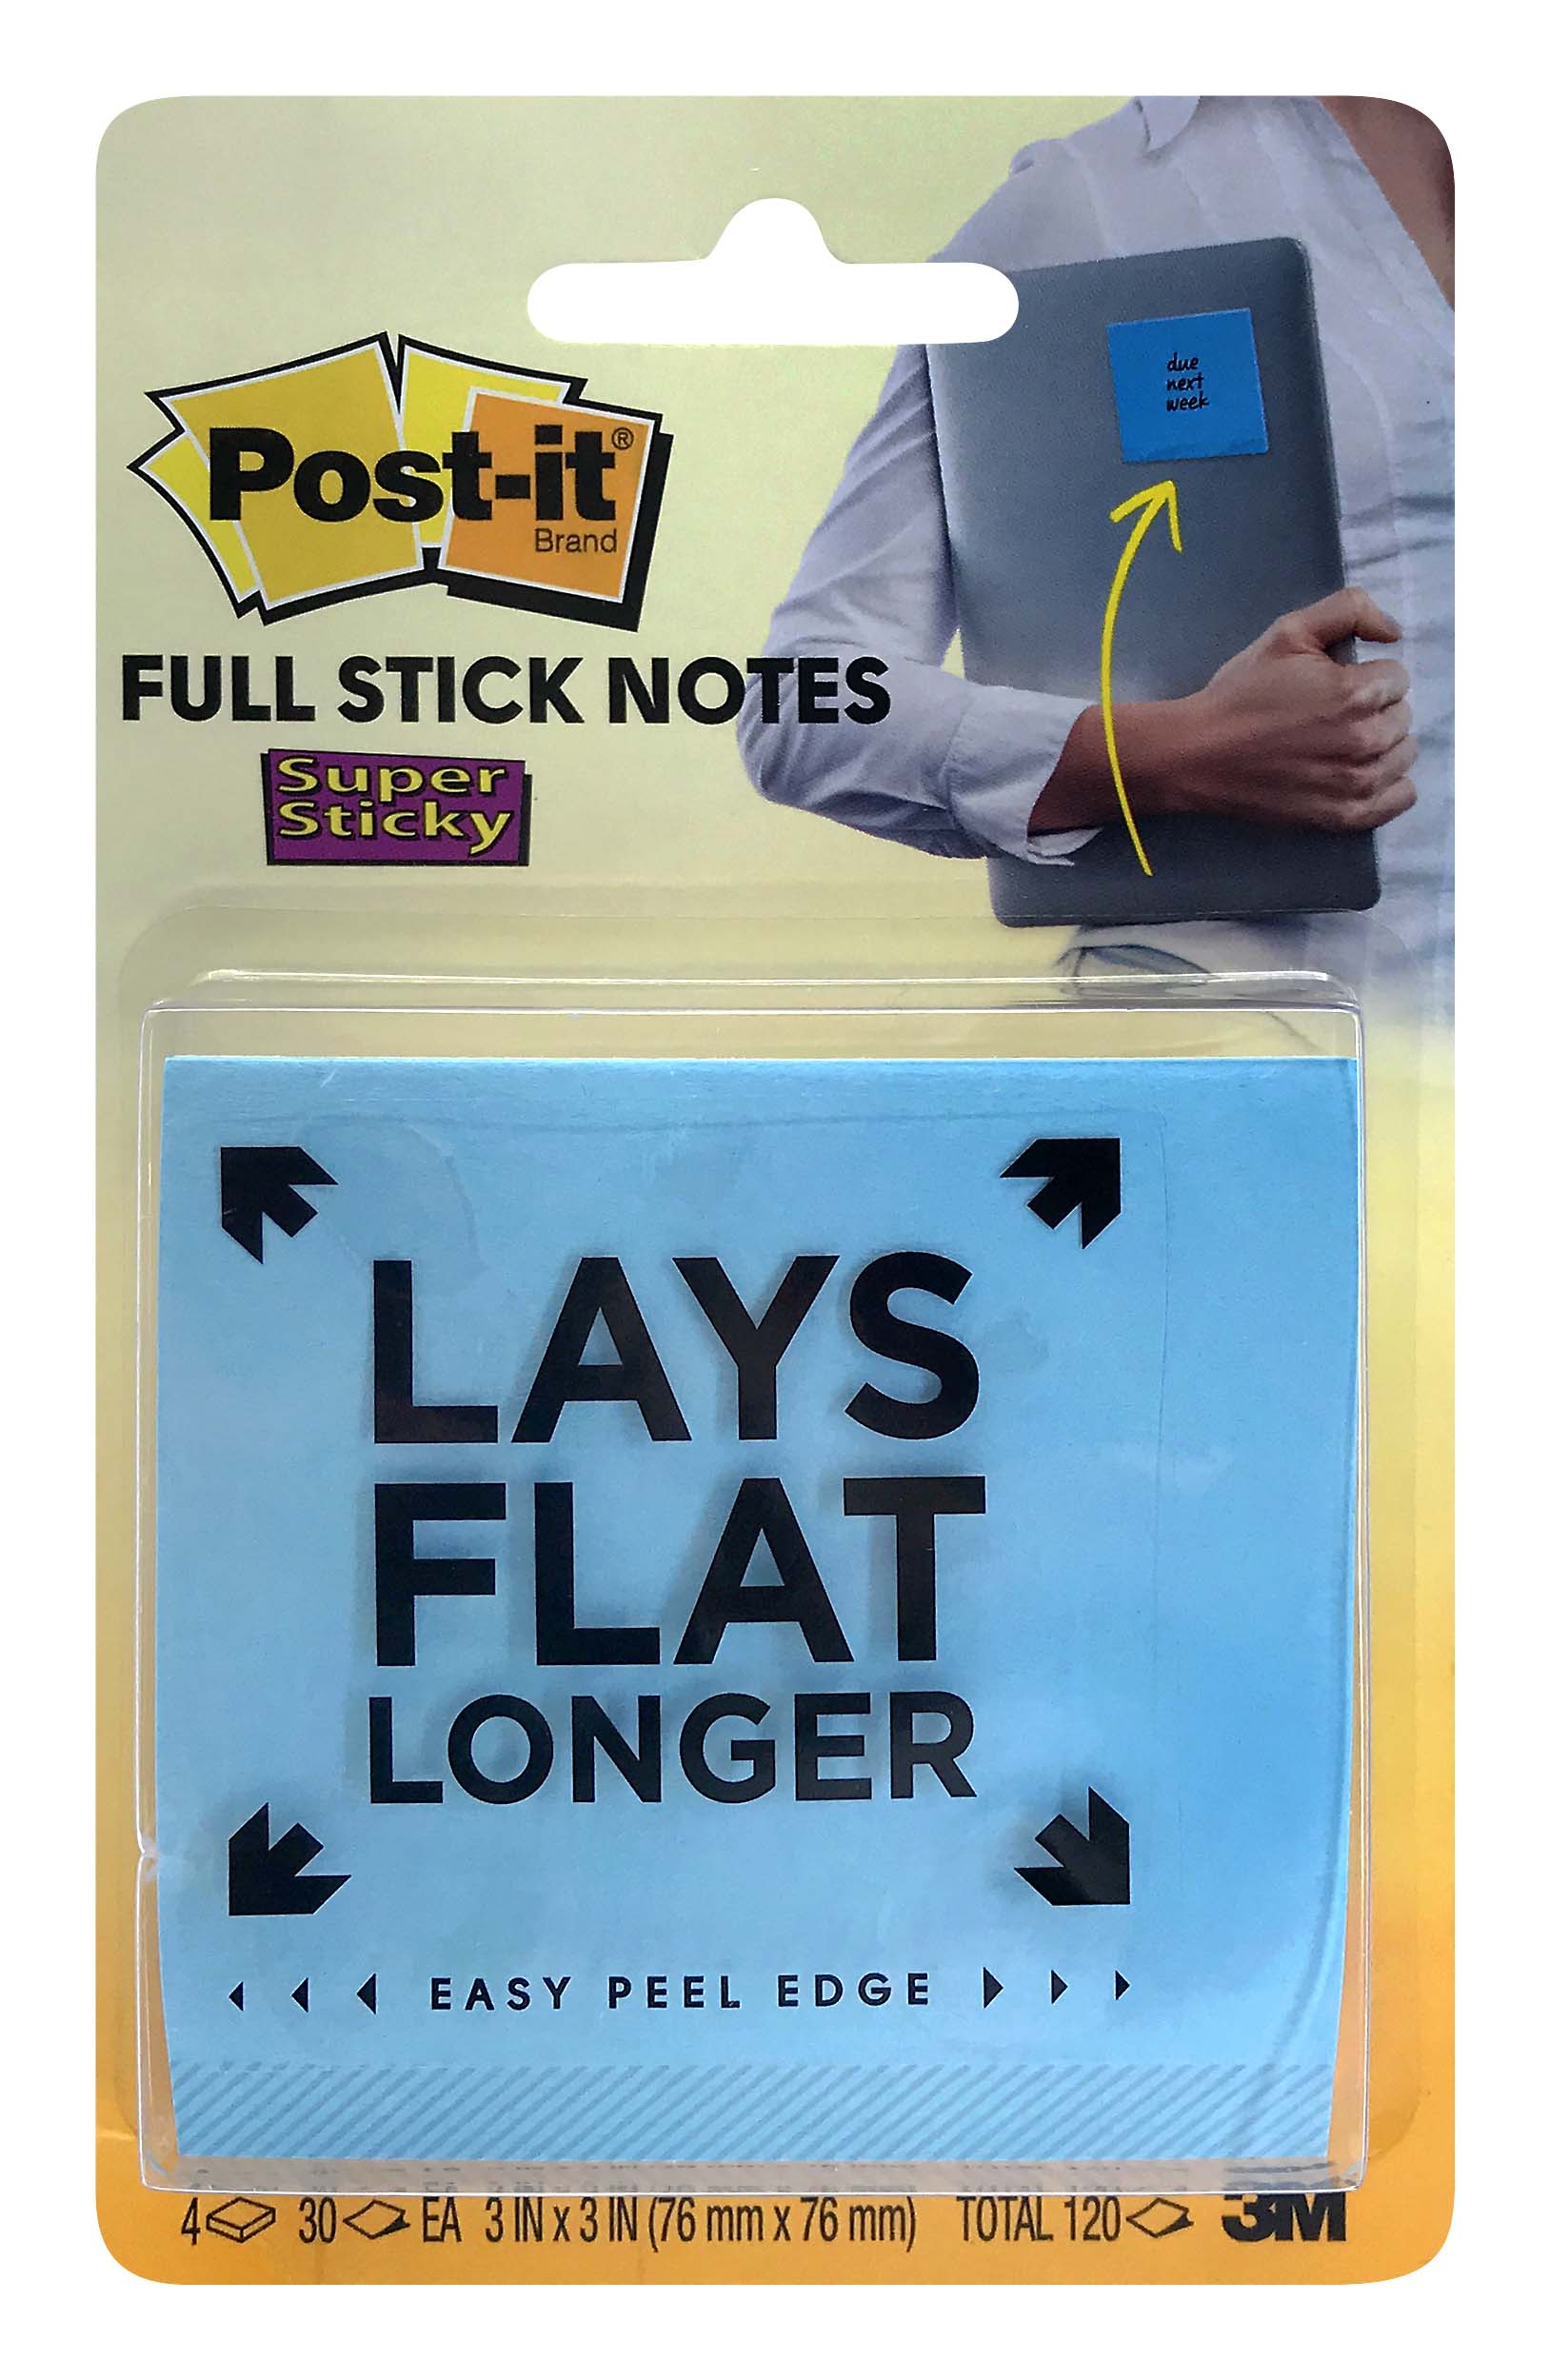 3M Post-it 3x3 Super Sticky Full Stick Notes, 4 Pads